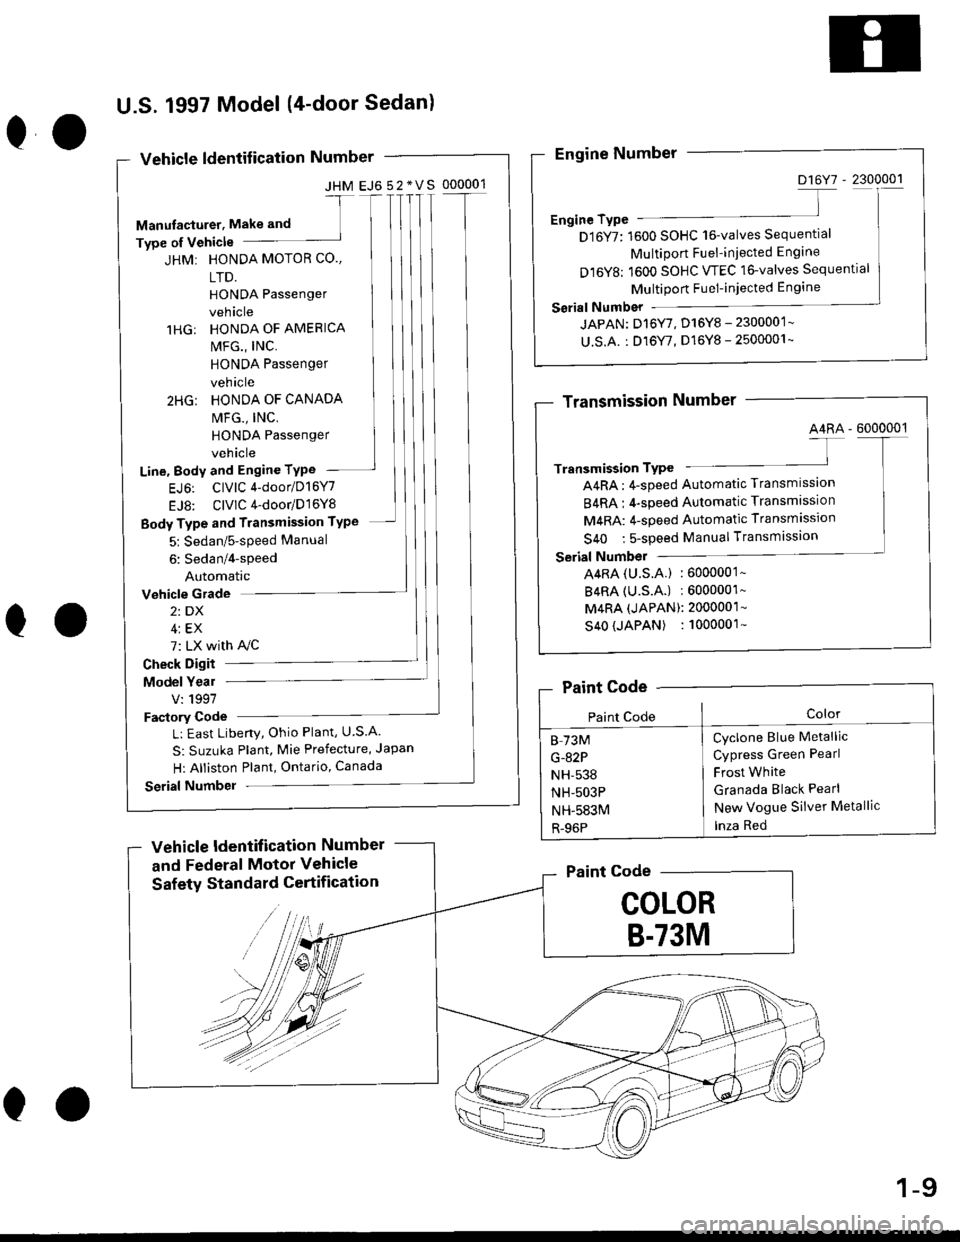 HONDA CIVIC 1997 6.G Workshop Manual 00
U.S. 1997 Model (4-door Sedanl
Vehicle ldentif ication Number
JHM EJ6 52*VS 000001
Manulaqturer. Make and 
-t
Type of Vehicle
HONDA MOTOR CO.,
LTD.
HONDA Passenger
vehicle
HONDA OF AMERICA
MFG., IN